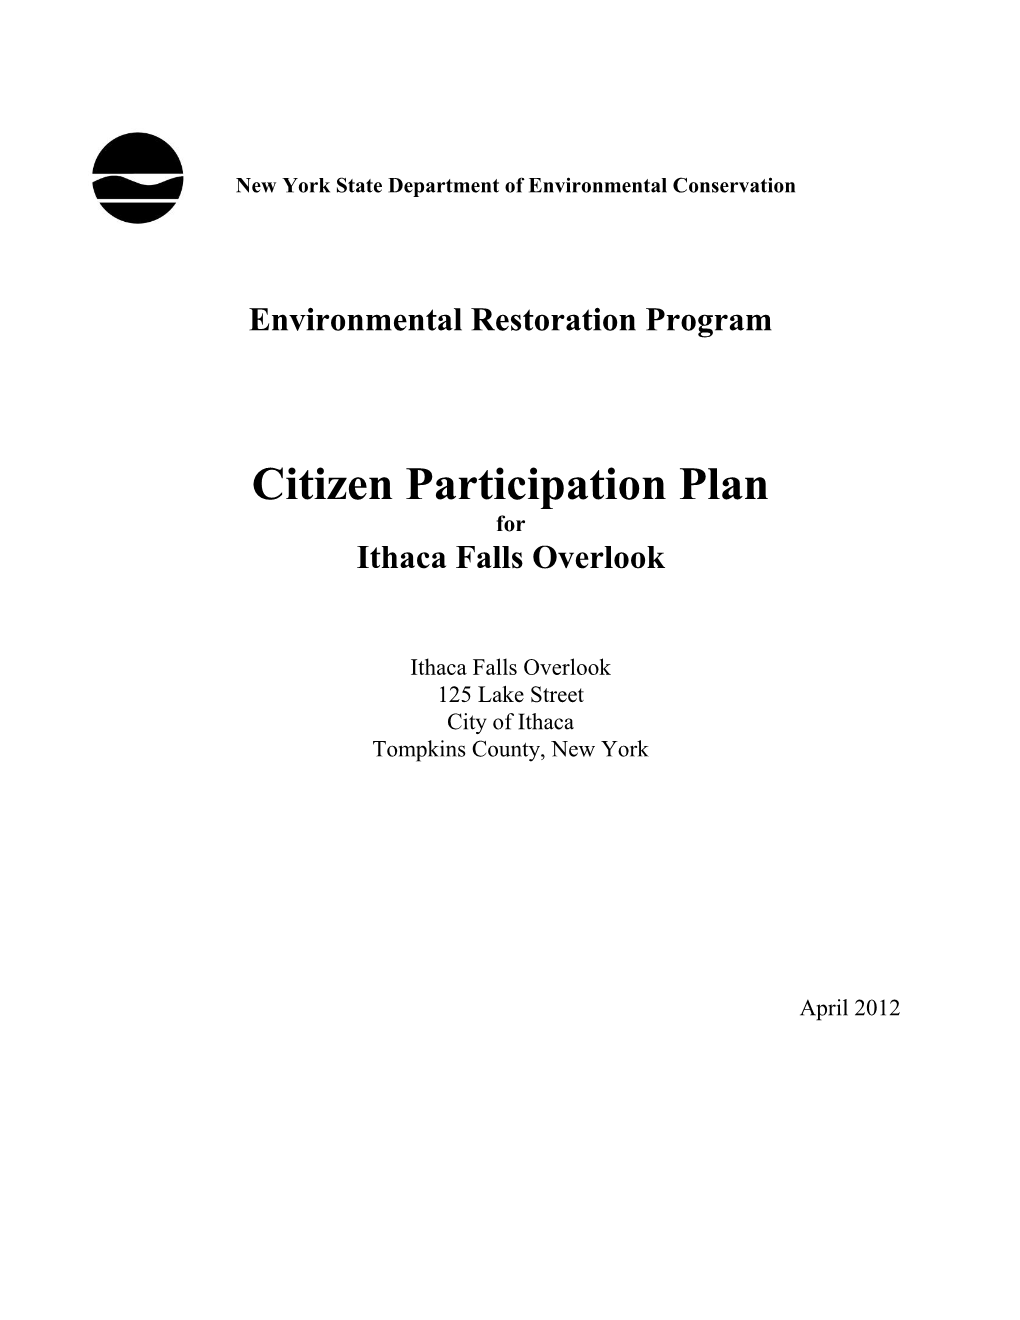 Citizen Participation Plan for Ithaca Falls Overlook